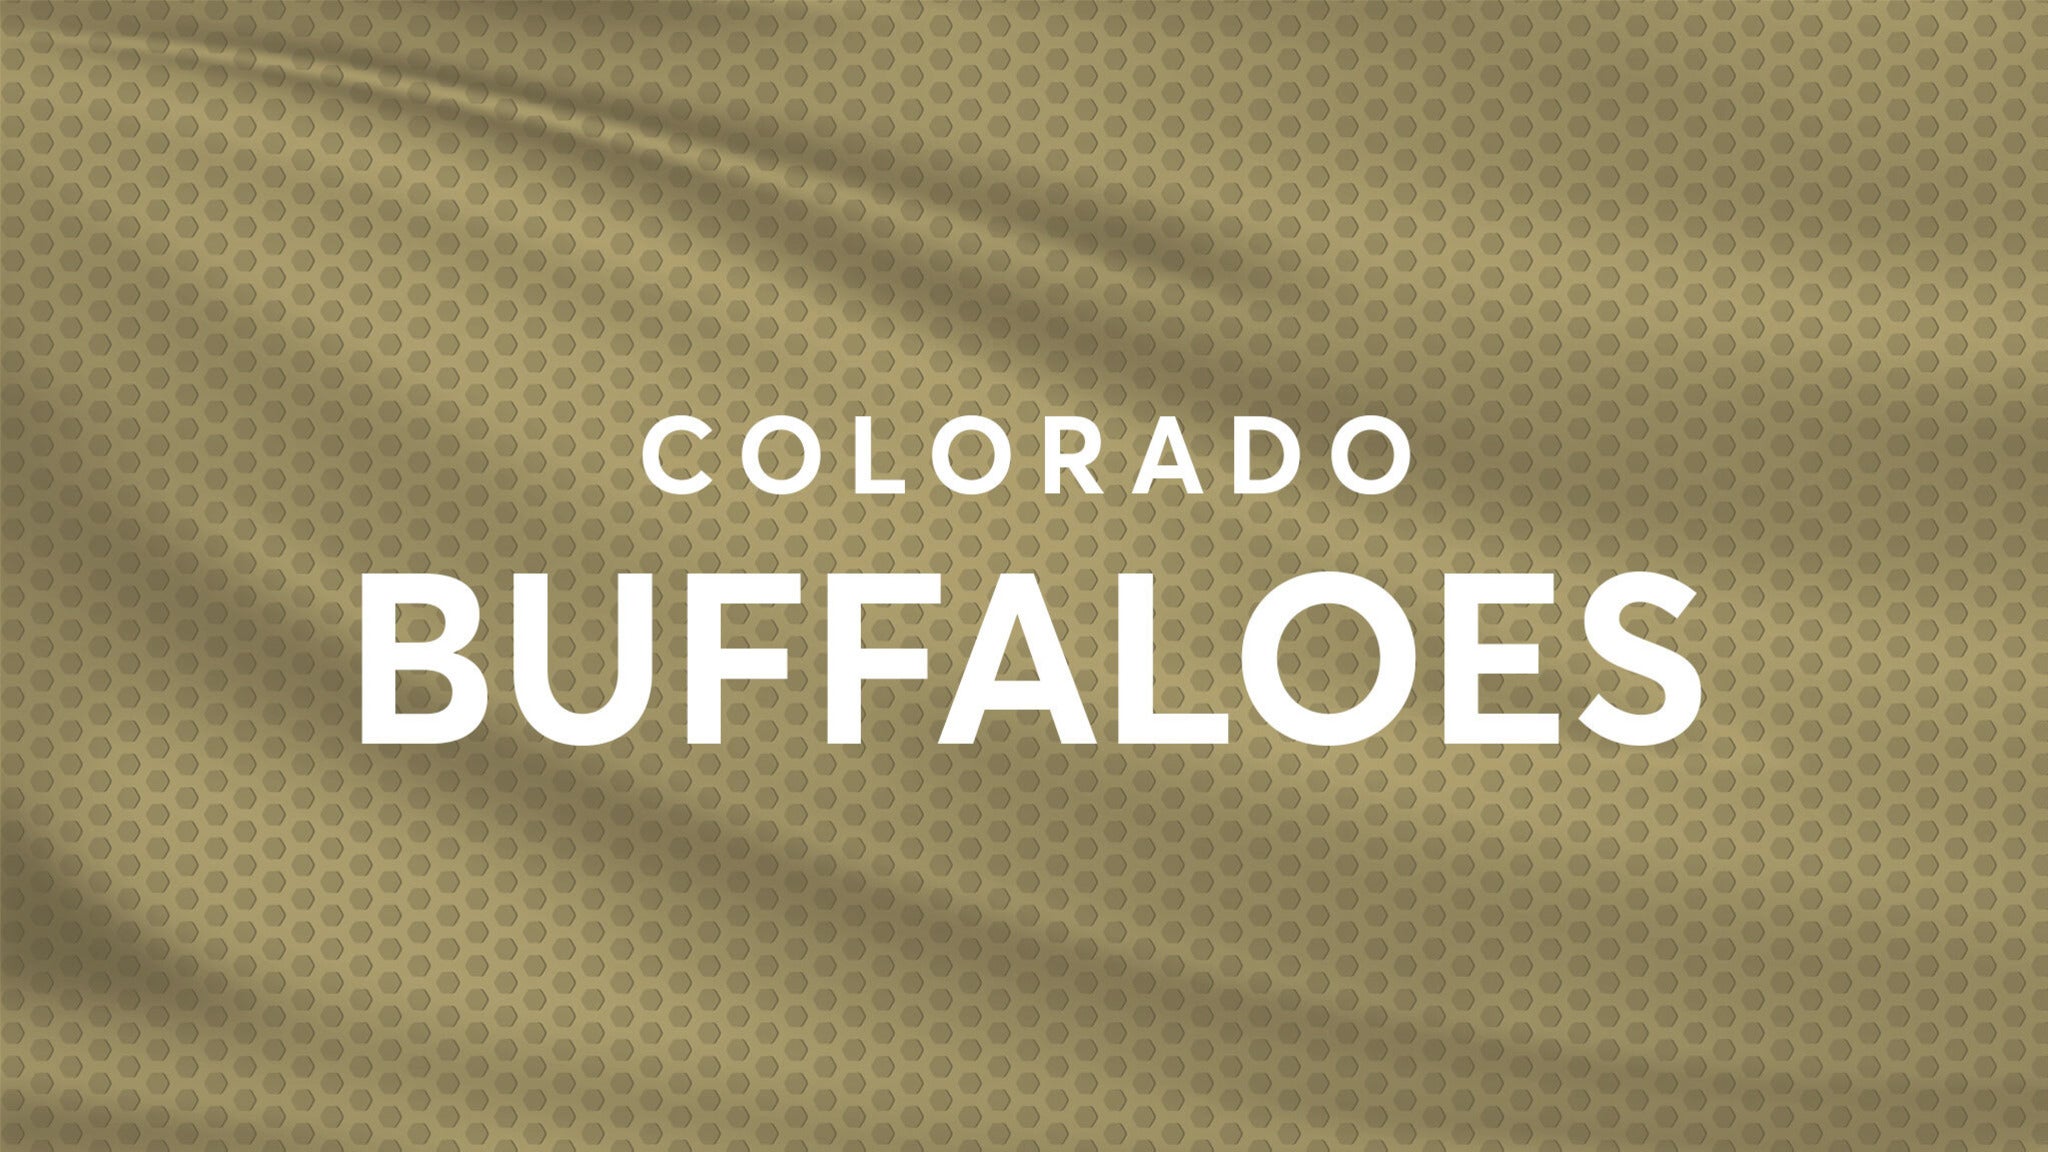 Colorado Buffaloes Football at Folsom Field Stadium